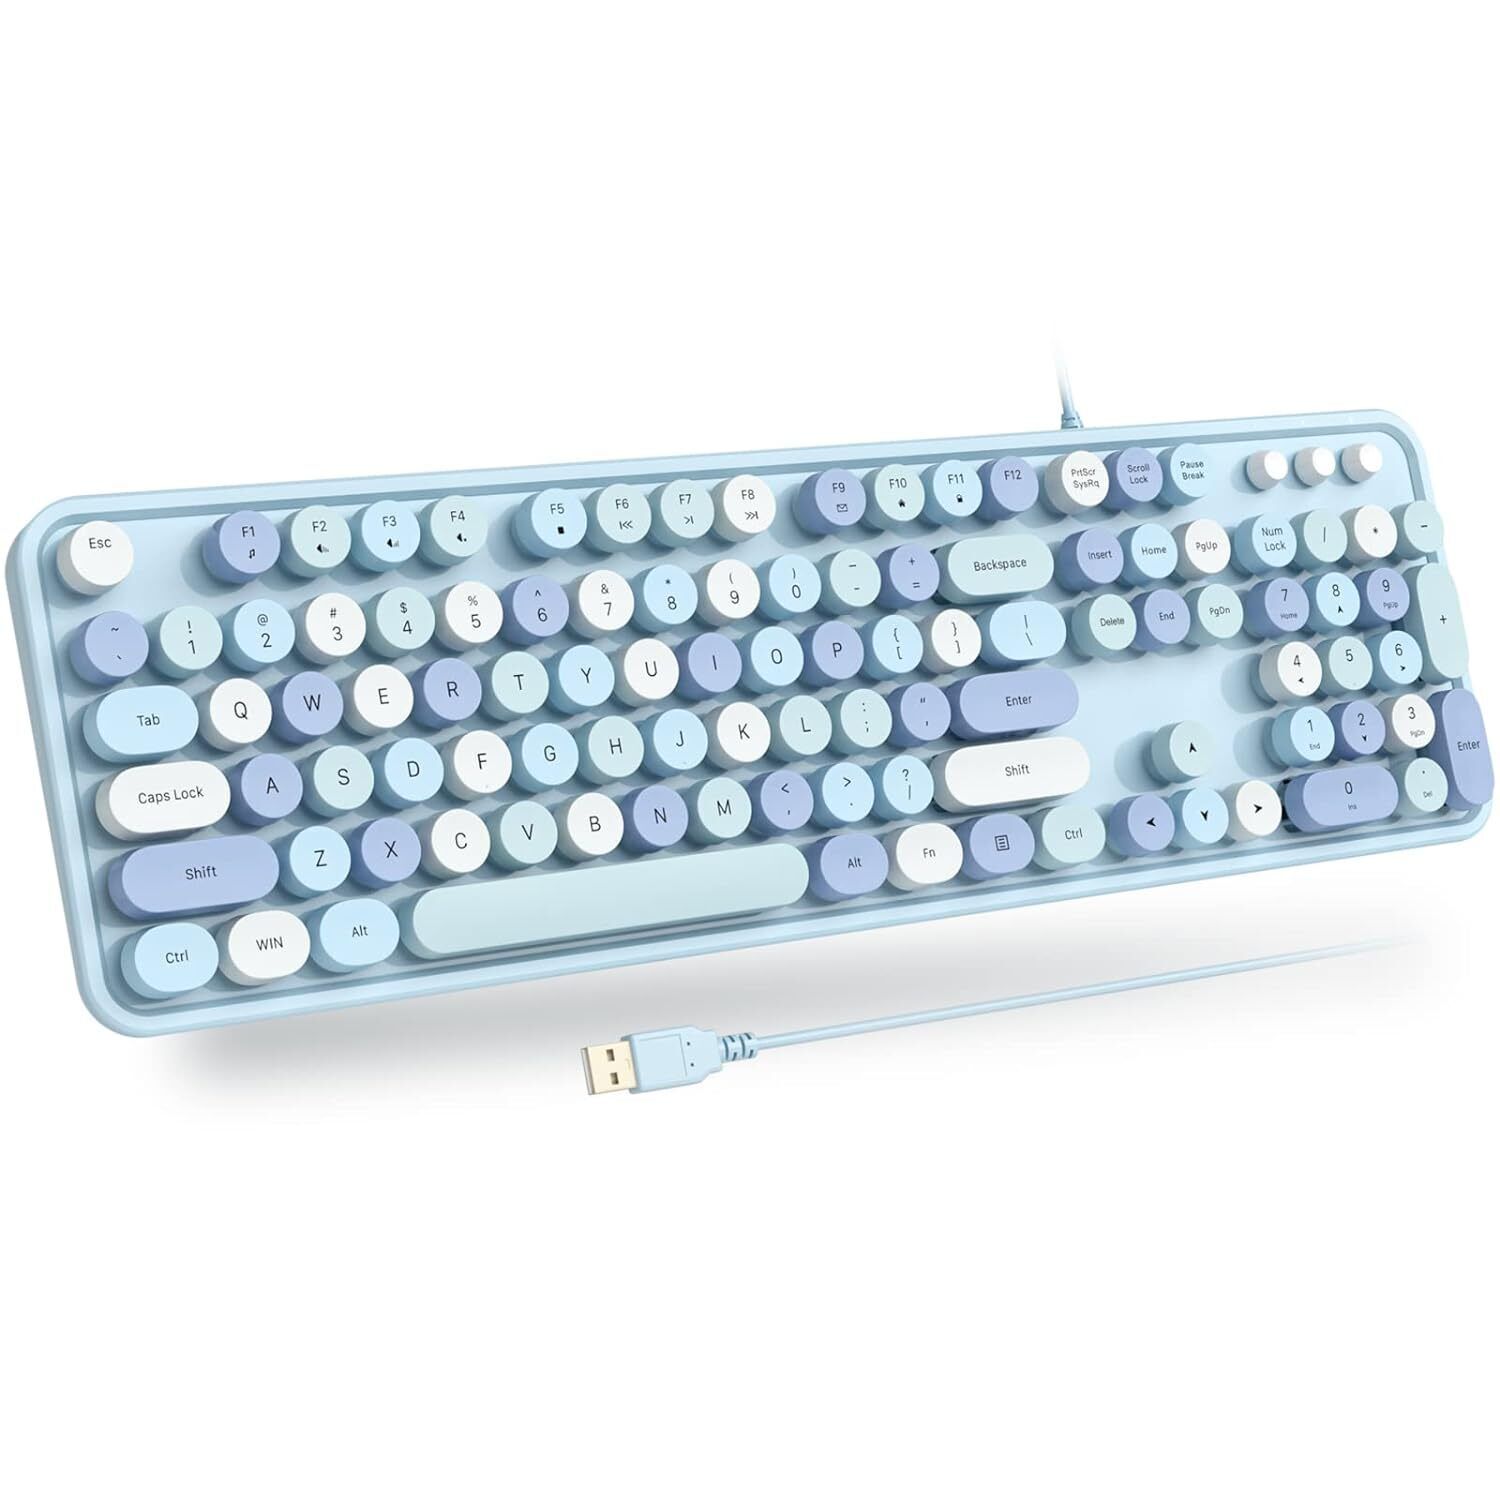 Usb Wired Computer Keyboard - Retro Typewriter Keyboard - Full Size Office Key